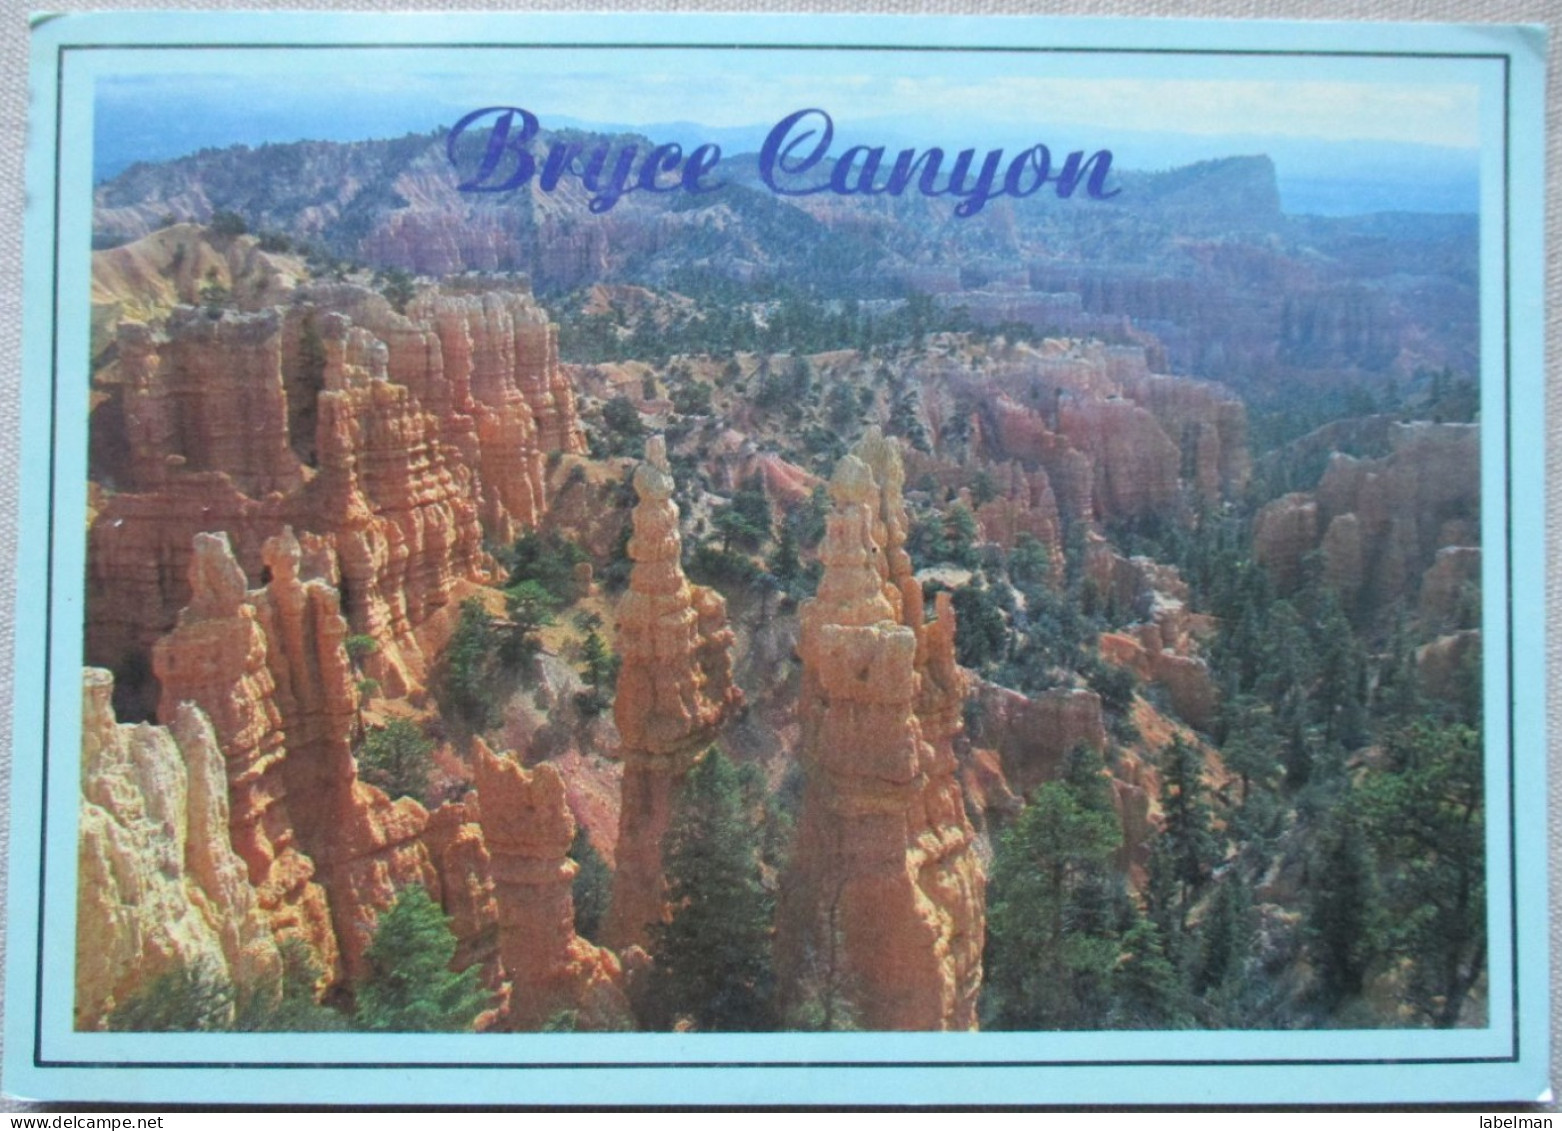 USA UNITED STATES BRYCEE CANYON NATIONAL PARK UTAH KARTE CARD POSTCARD CARTE POSTALE ANSICHTSKARTE CARTOLINA POSTKARTE - Las Vegas